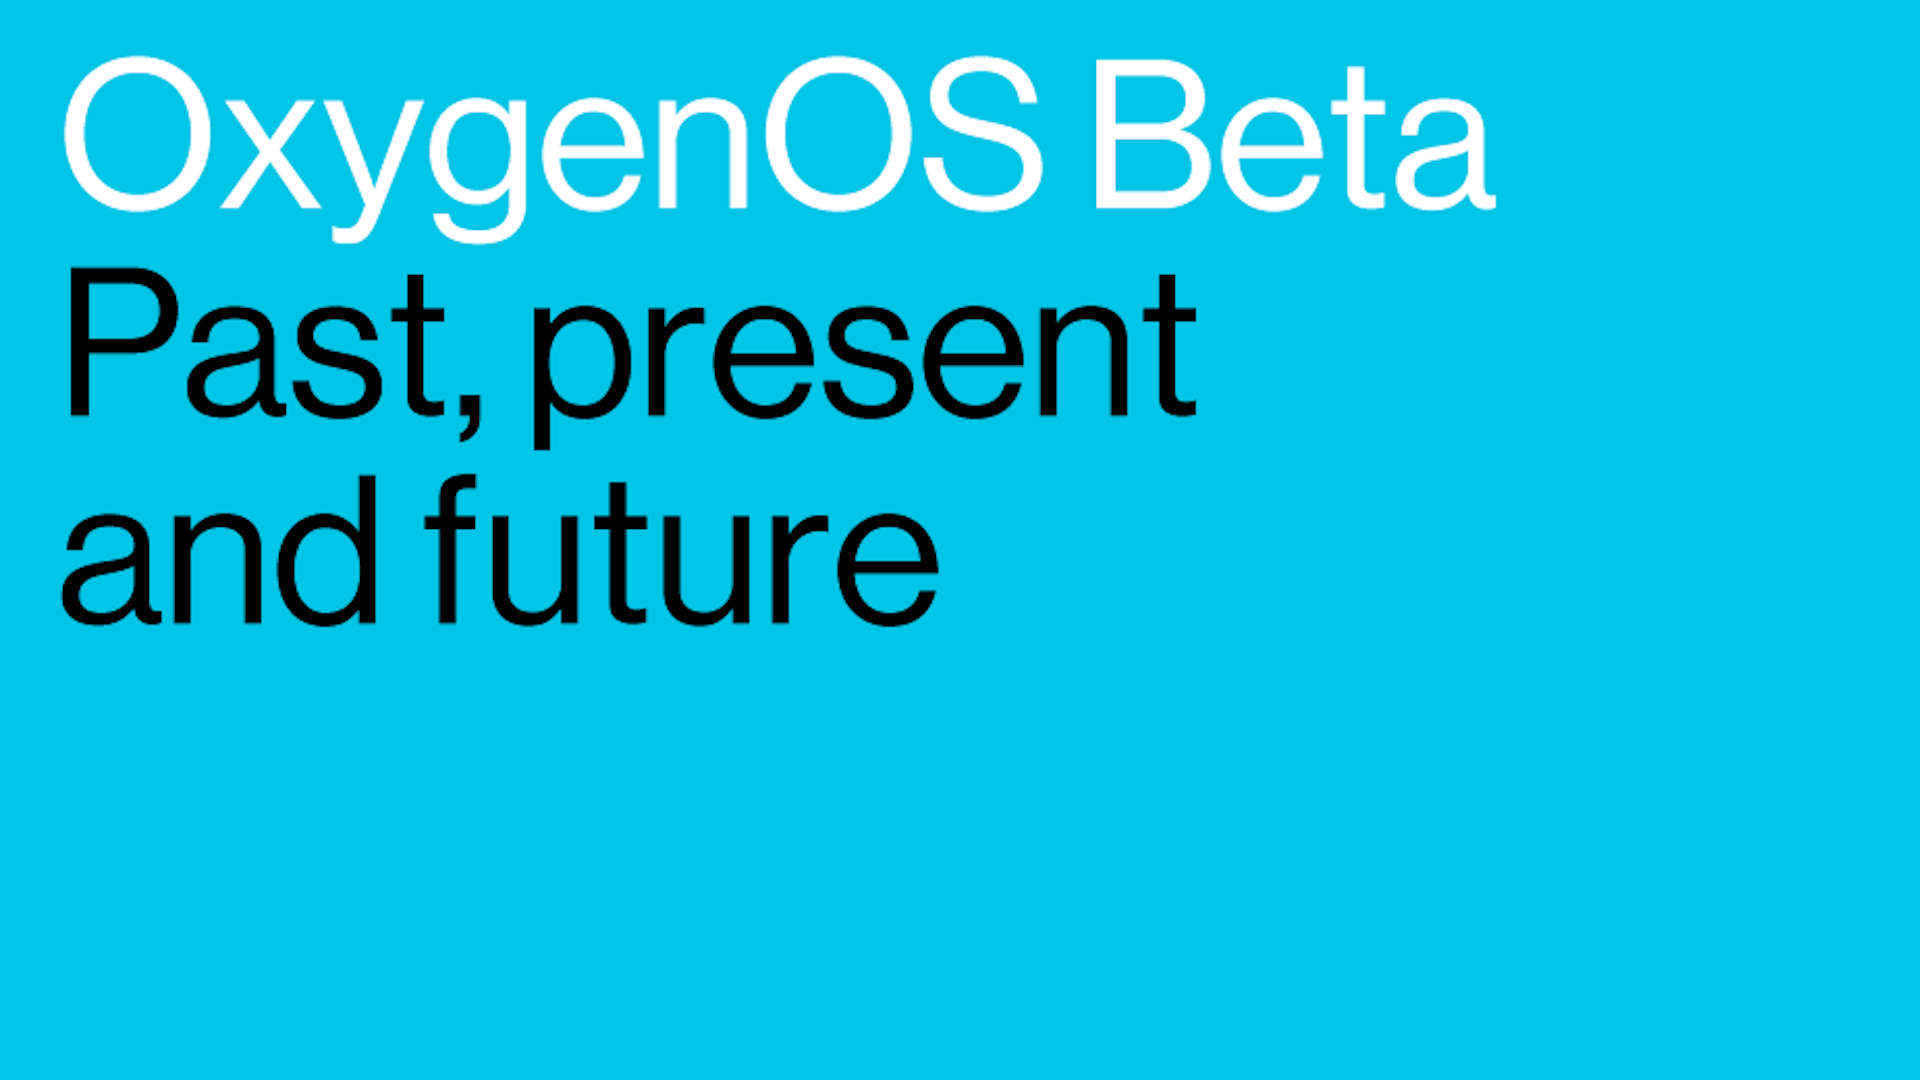 oneplus oxygenos beta